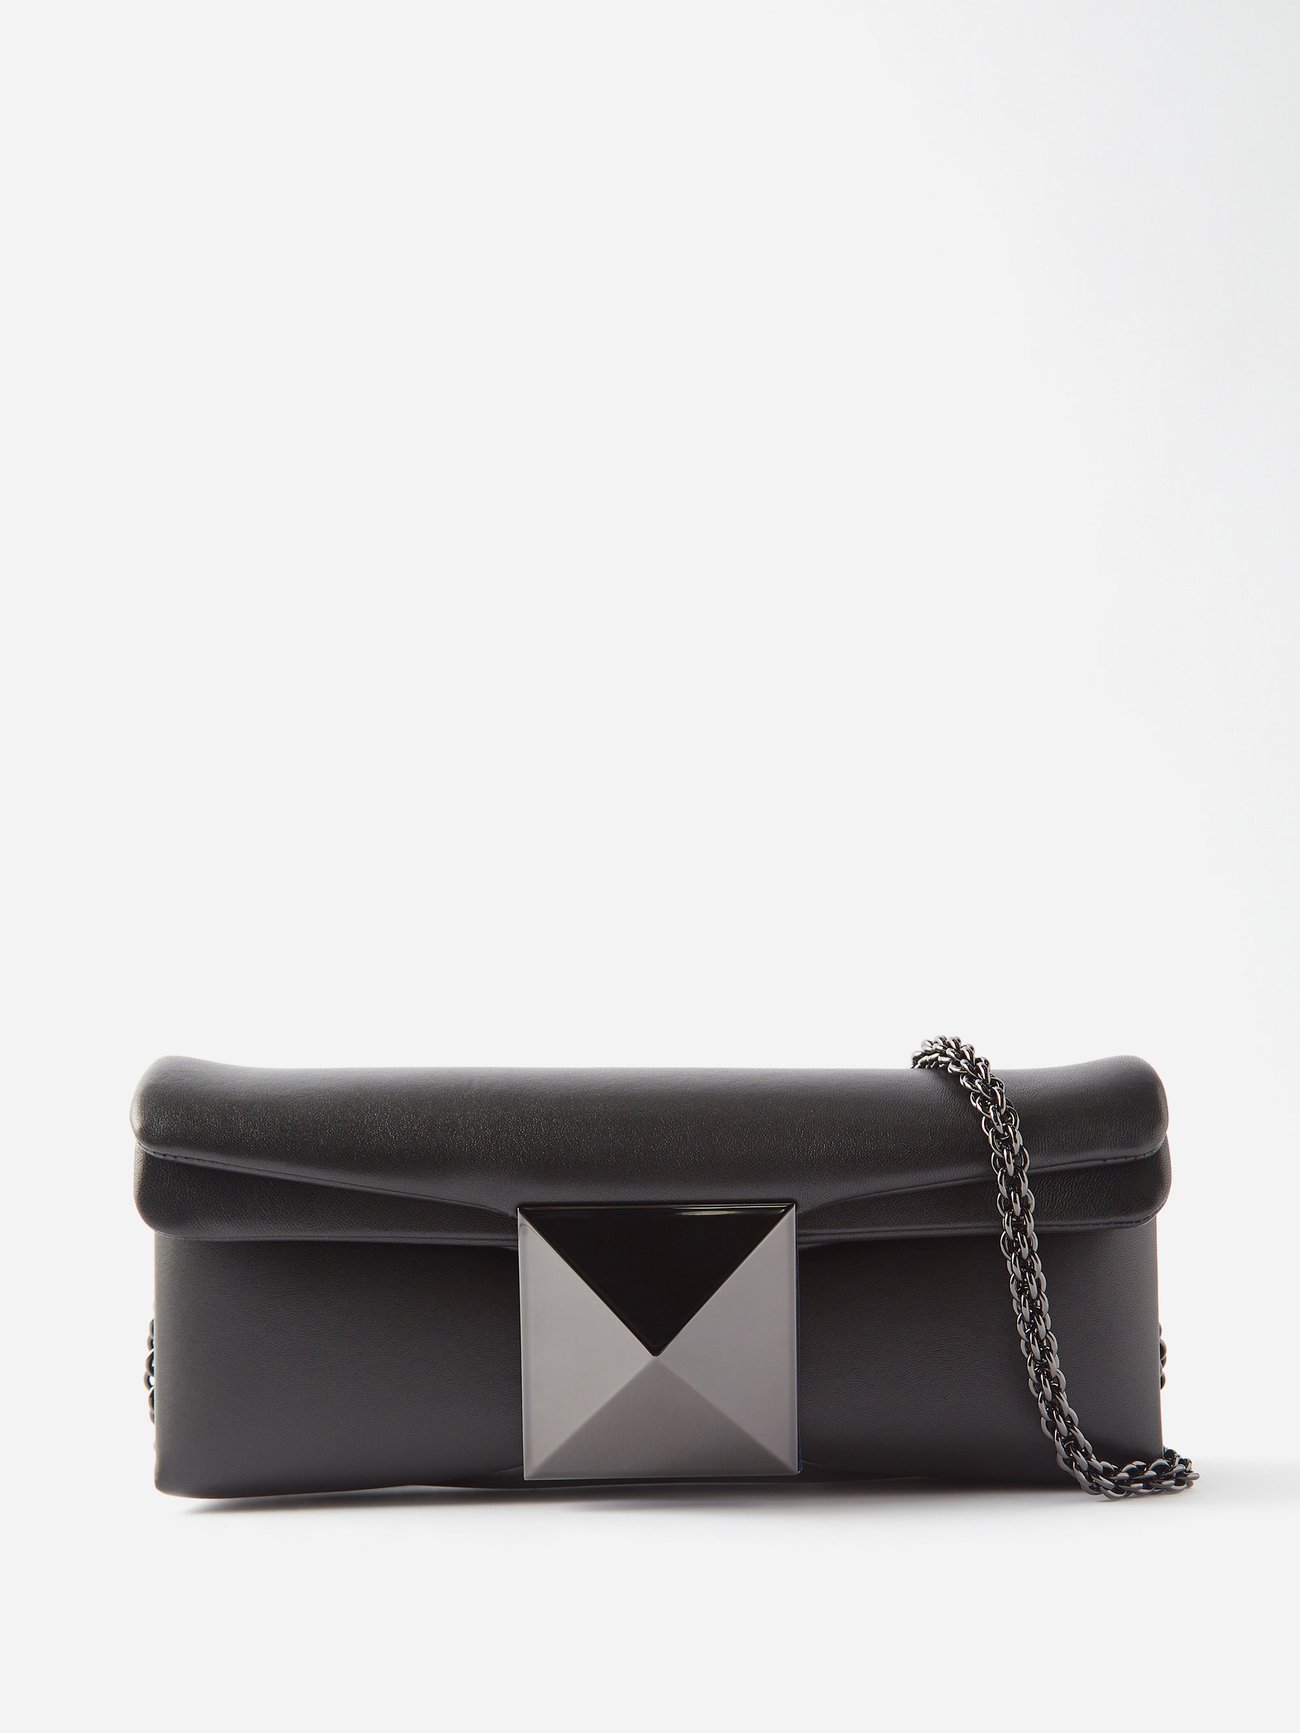 Black One Stud leather clutch bag | Valentino Garavani | MATCHESFASHION